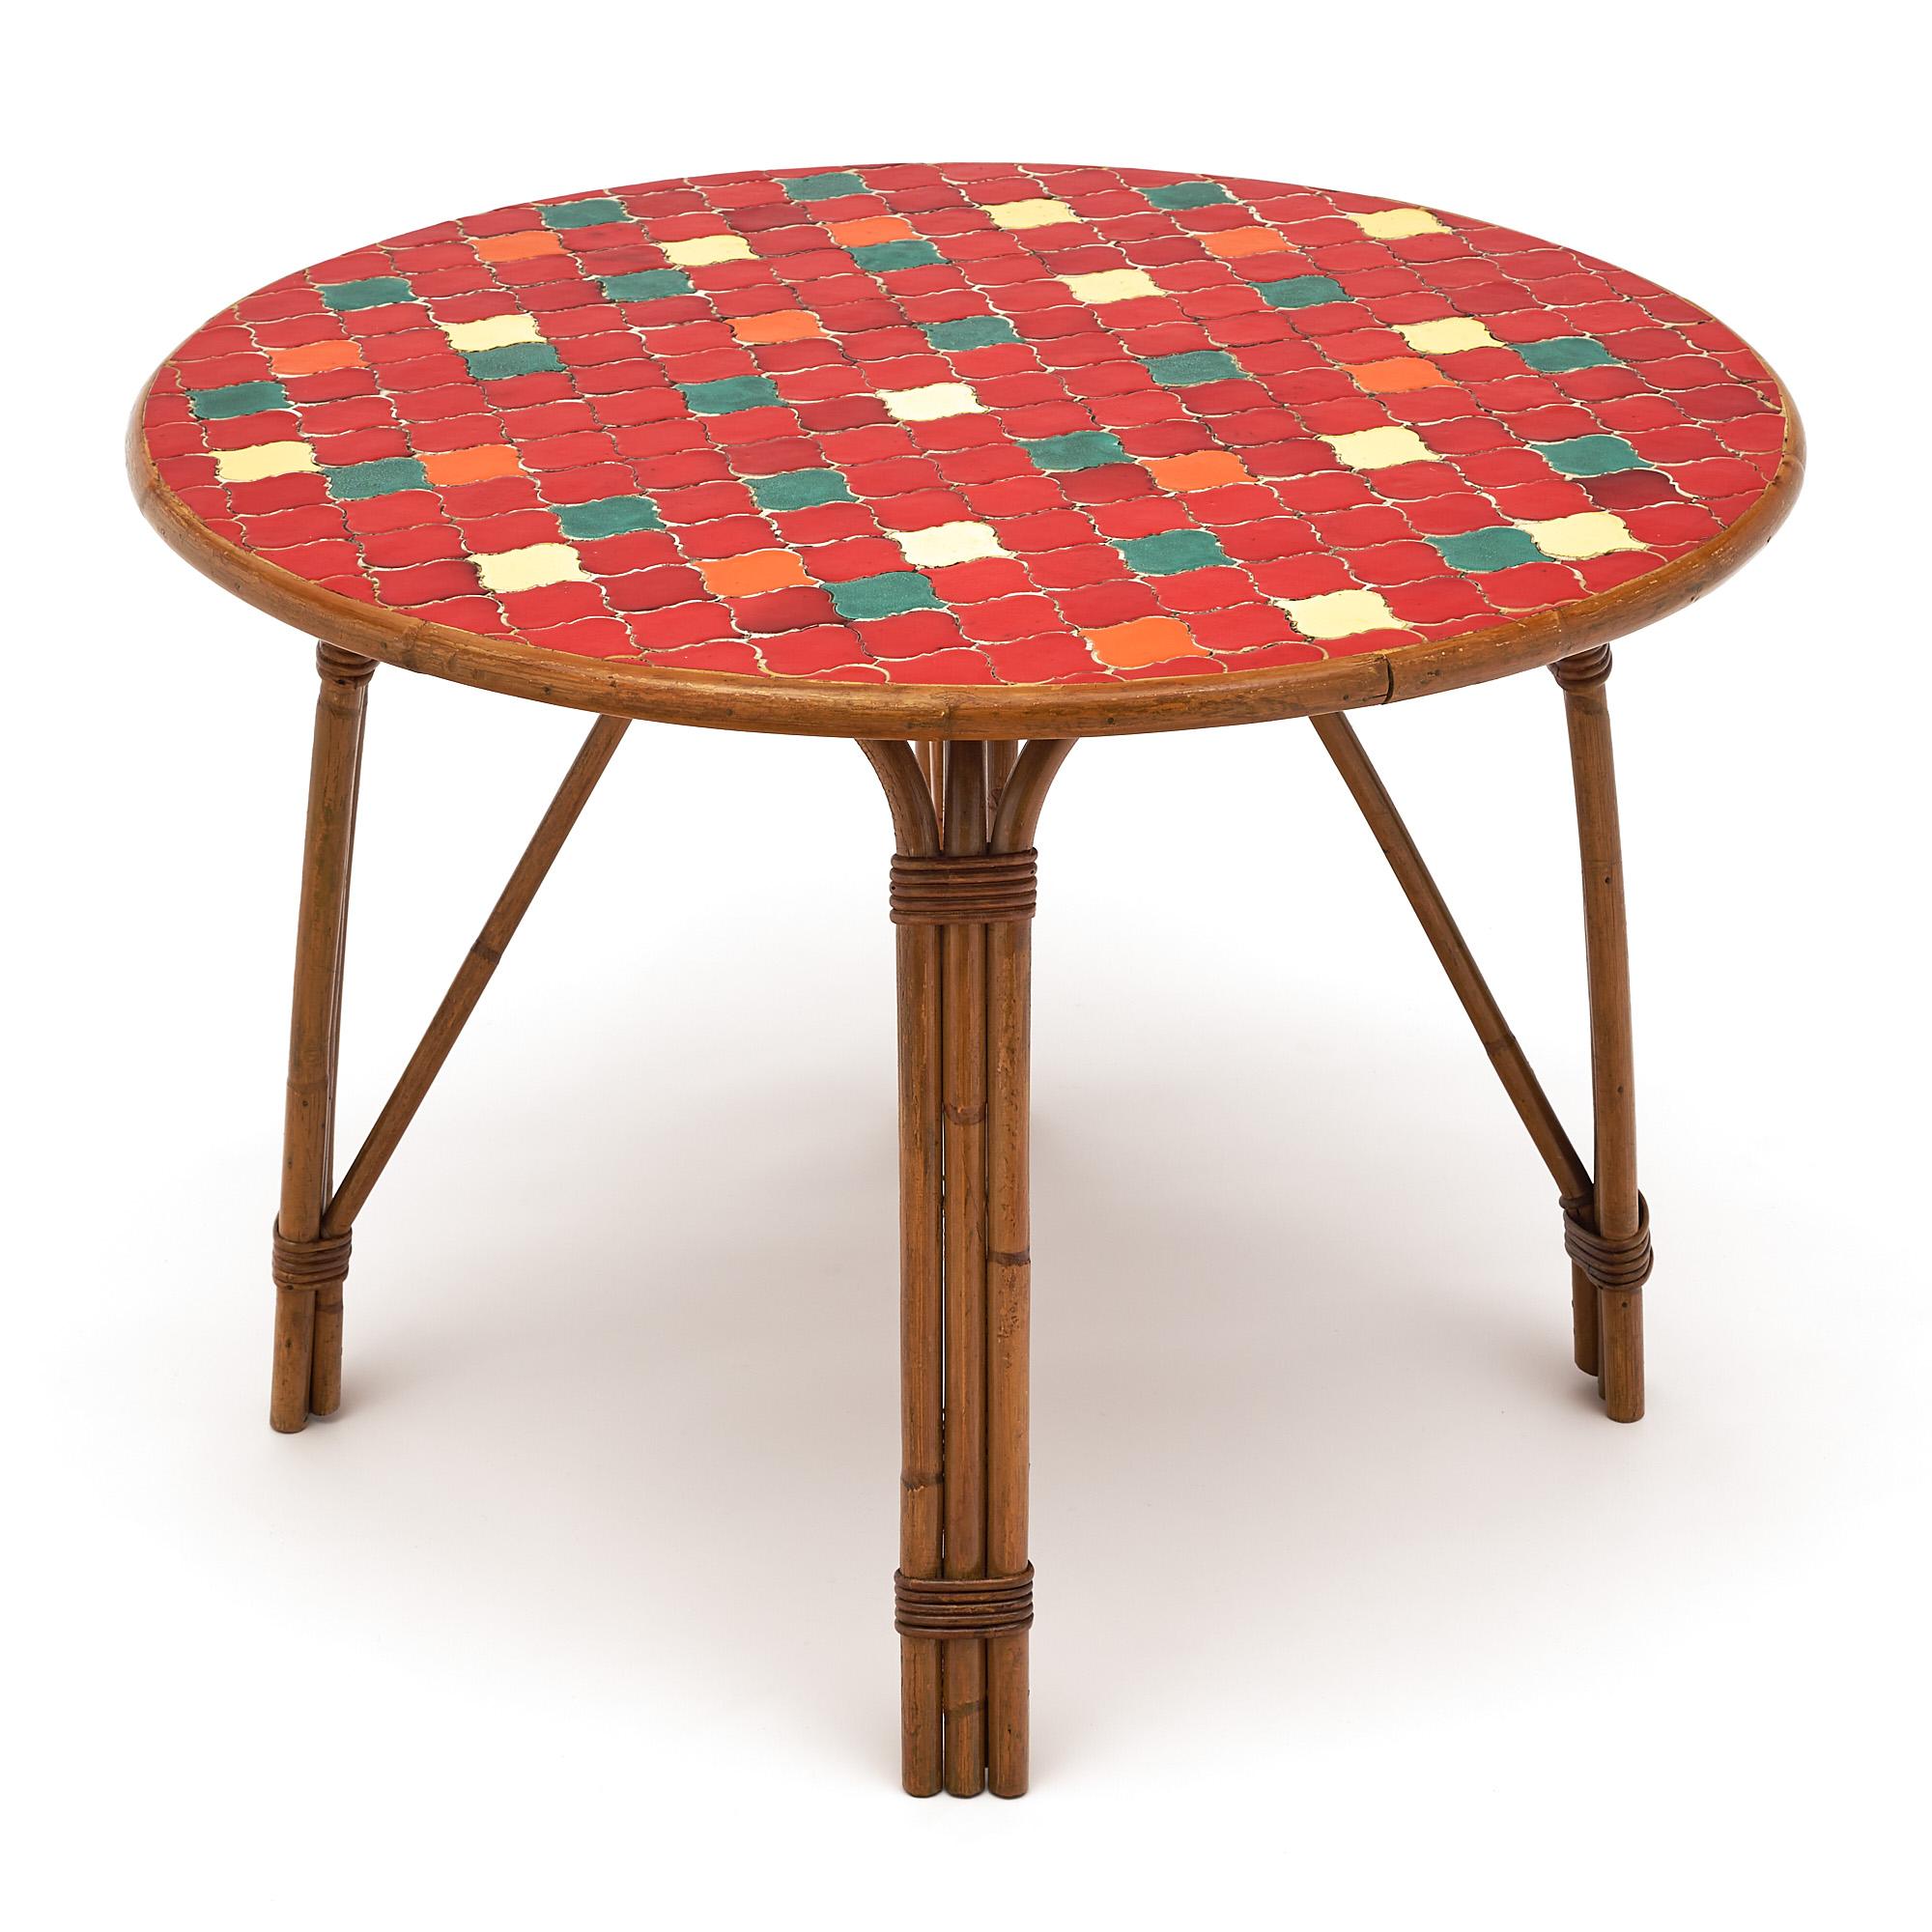 Ceramic French Vintage Tiled Table